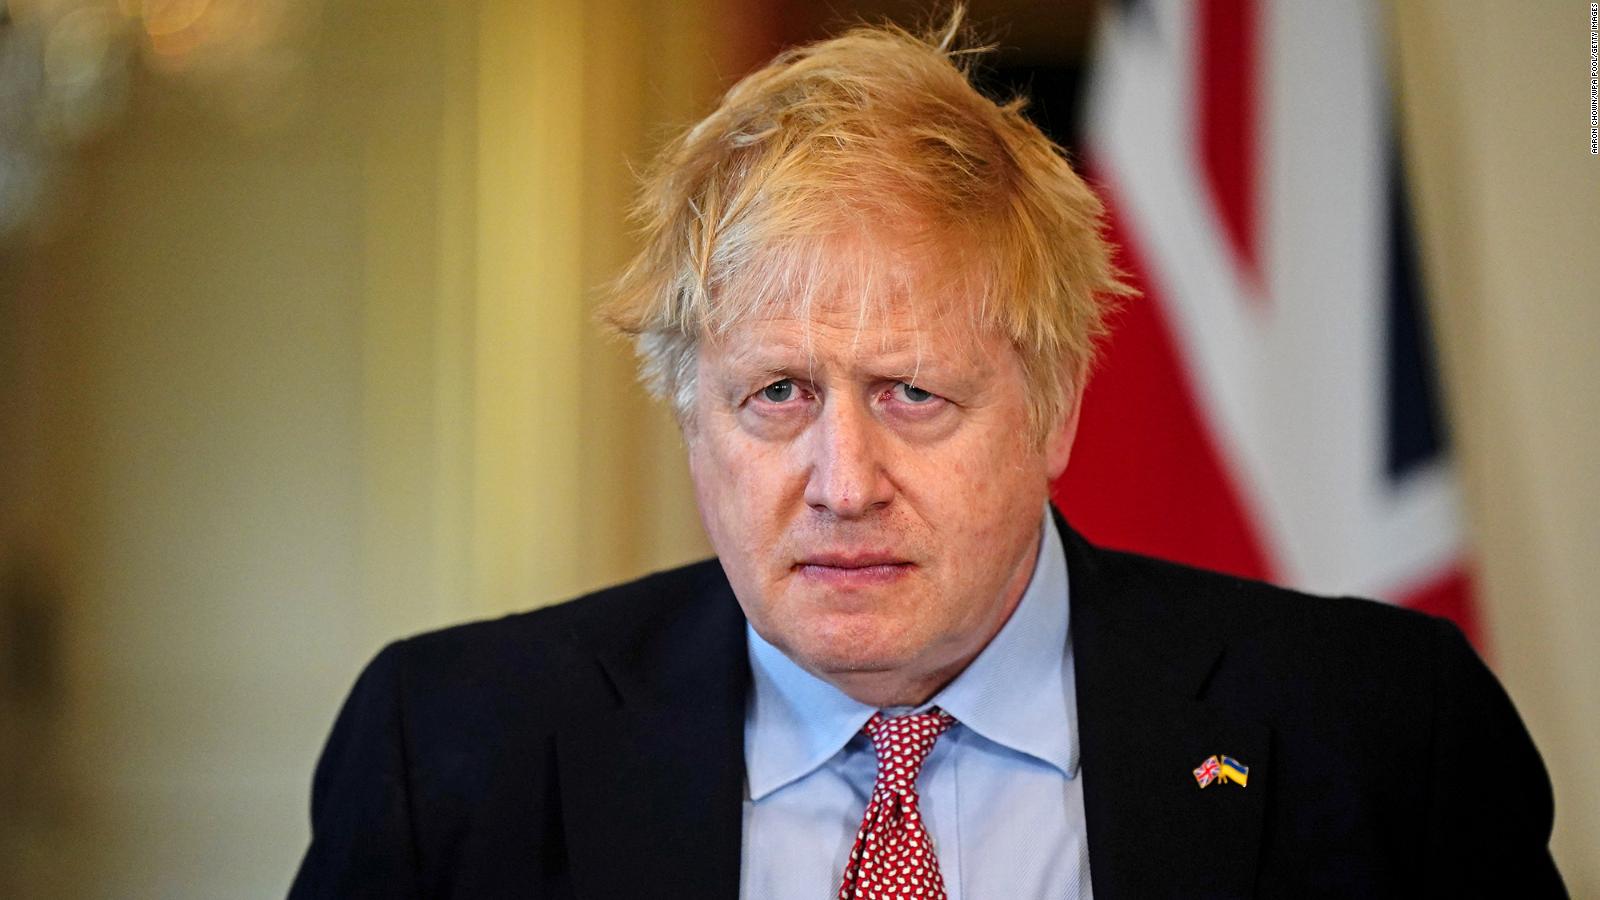 Why did British Prime Minister Boris Johnson resign?